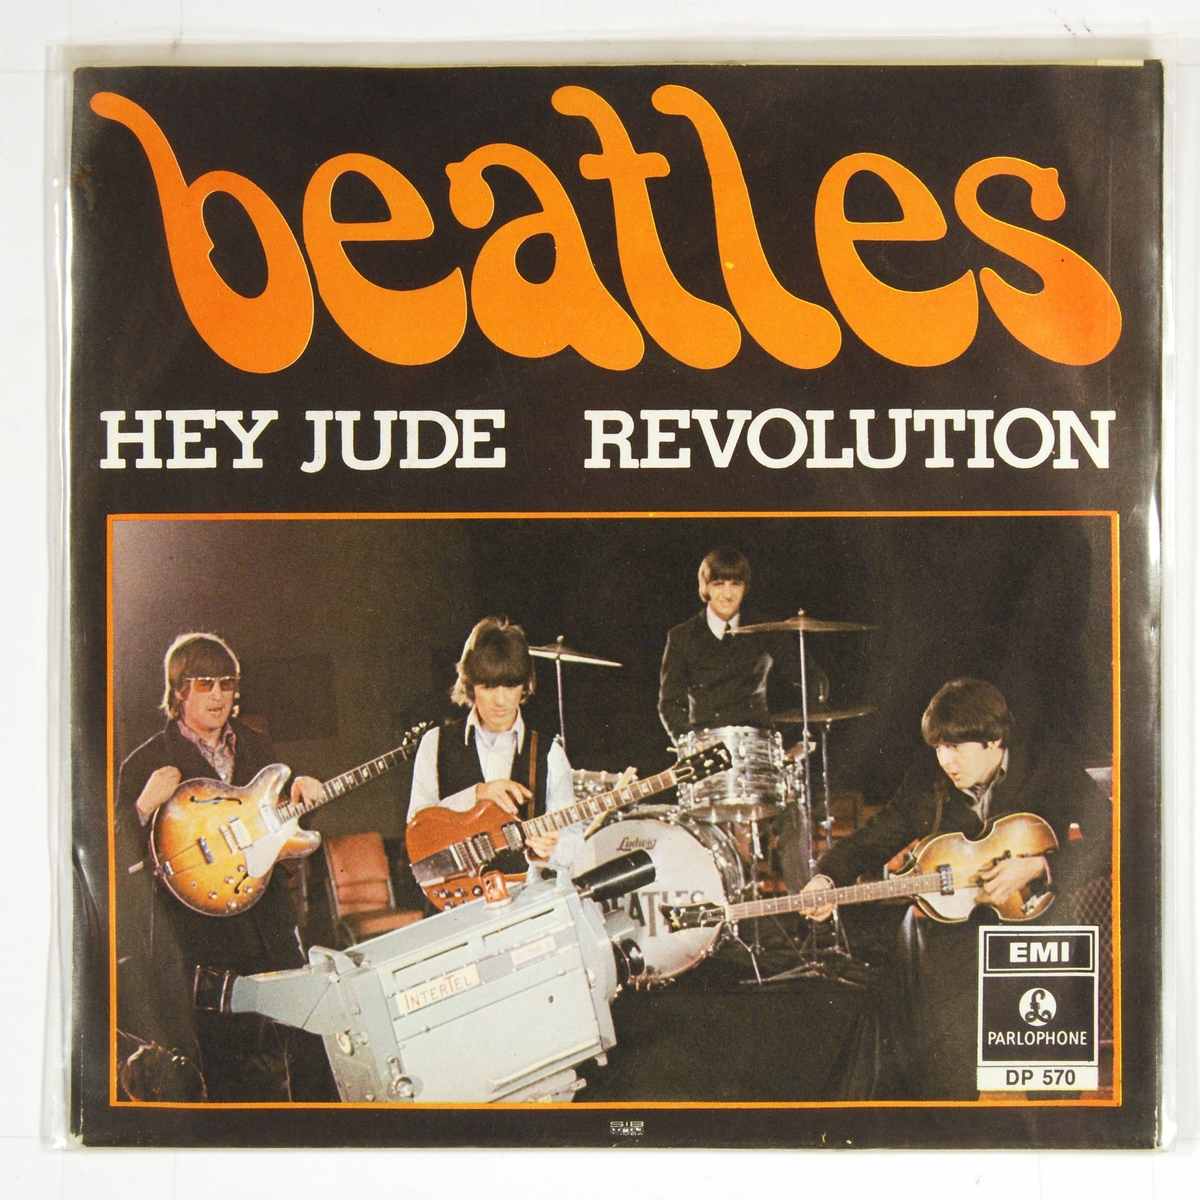 Fotografi av "The Beatles" med musikkinstrumenter.